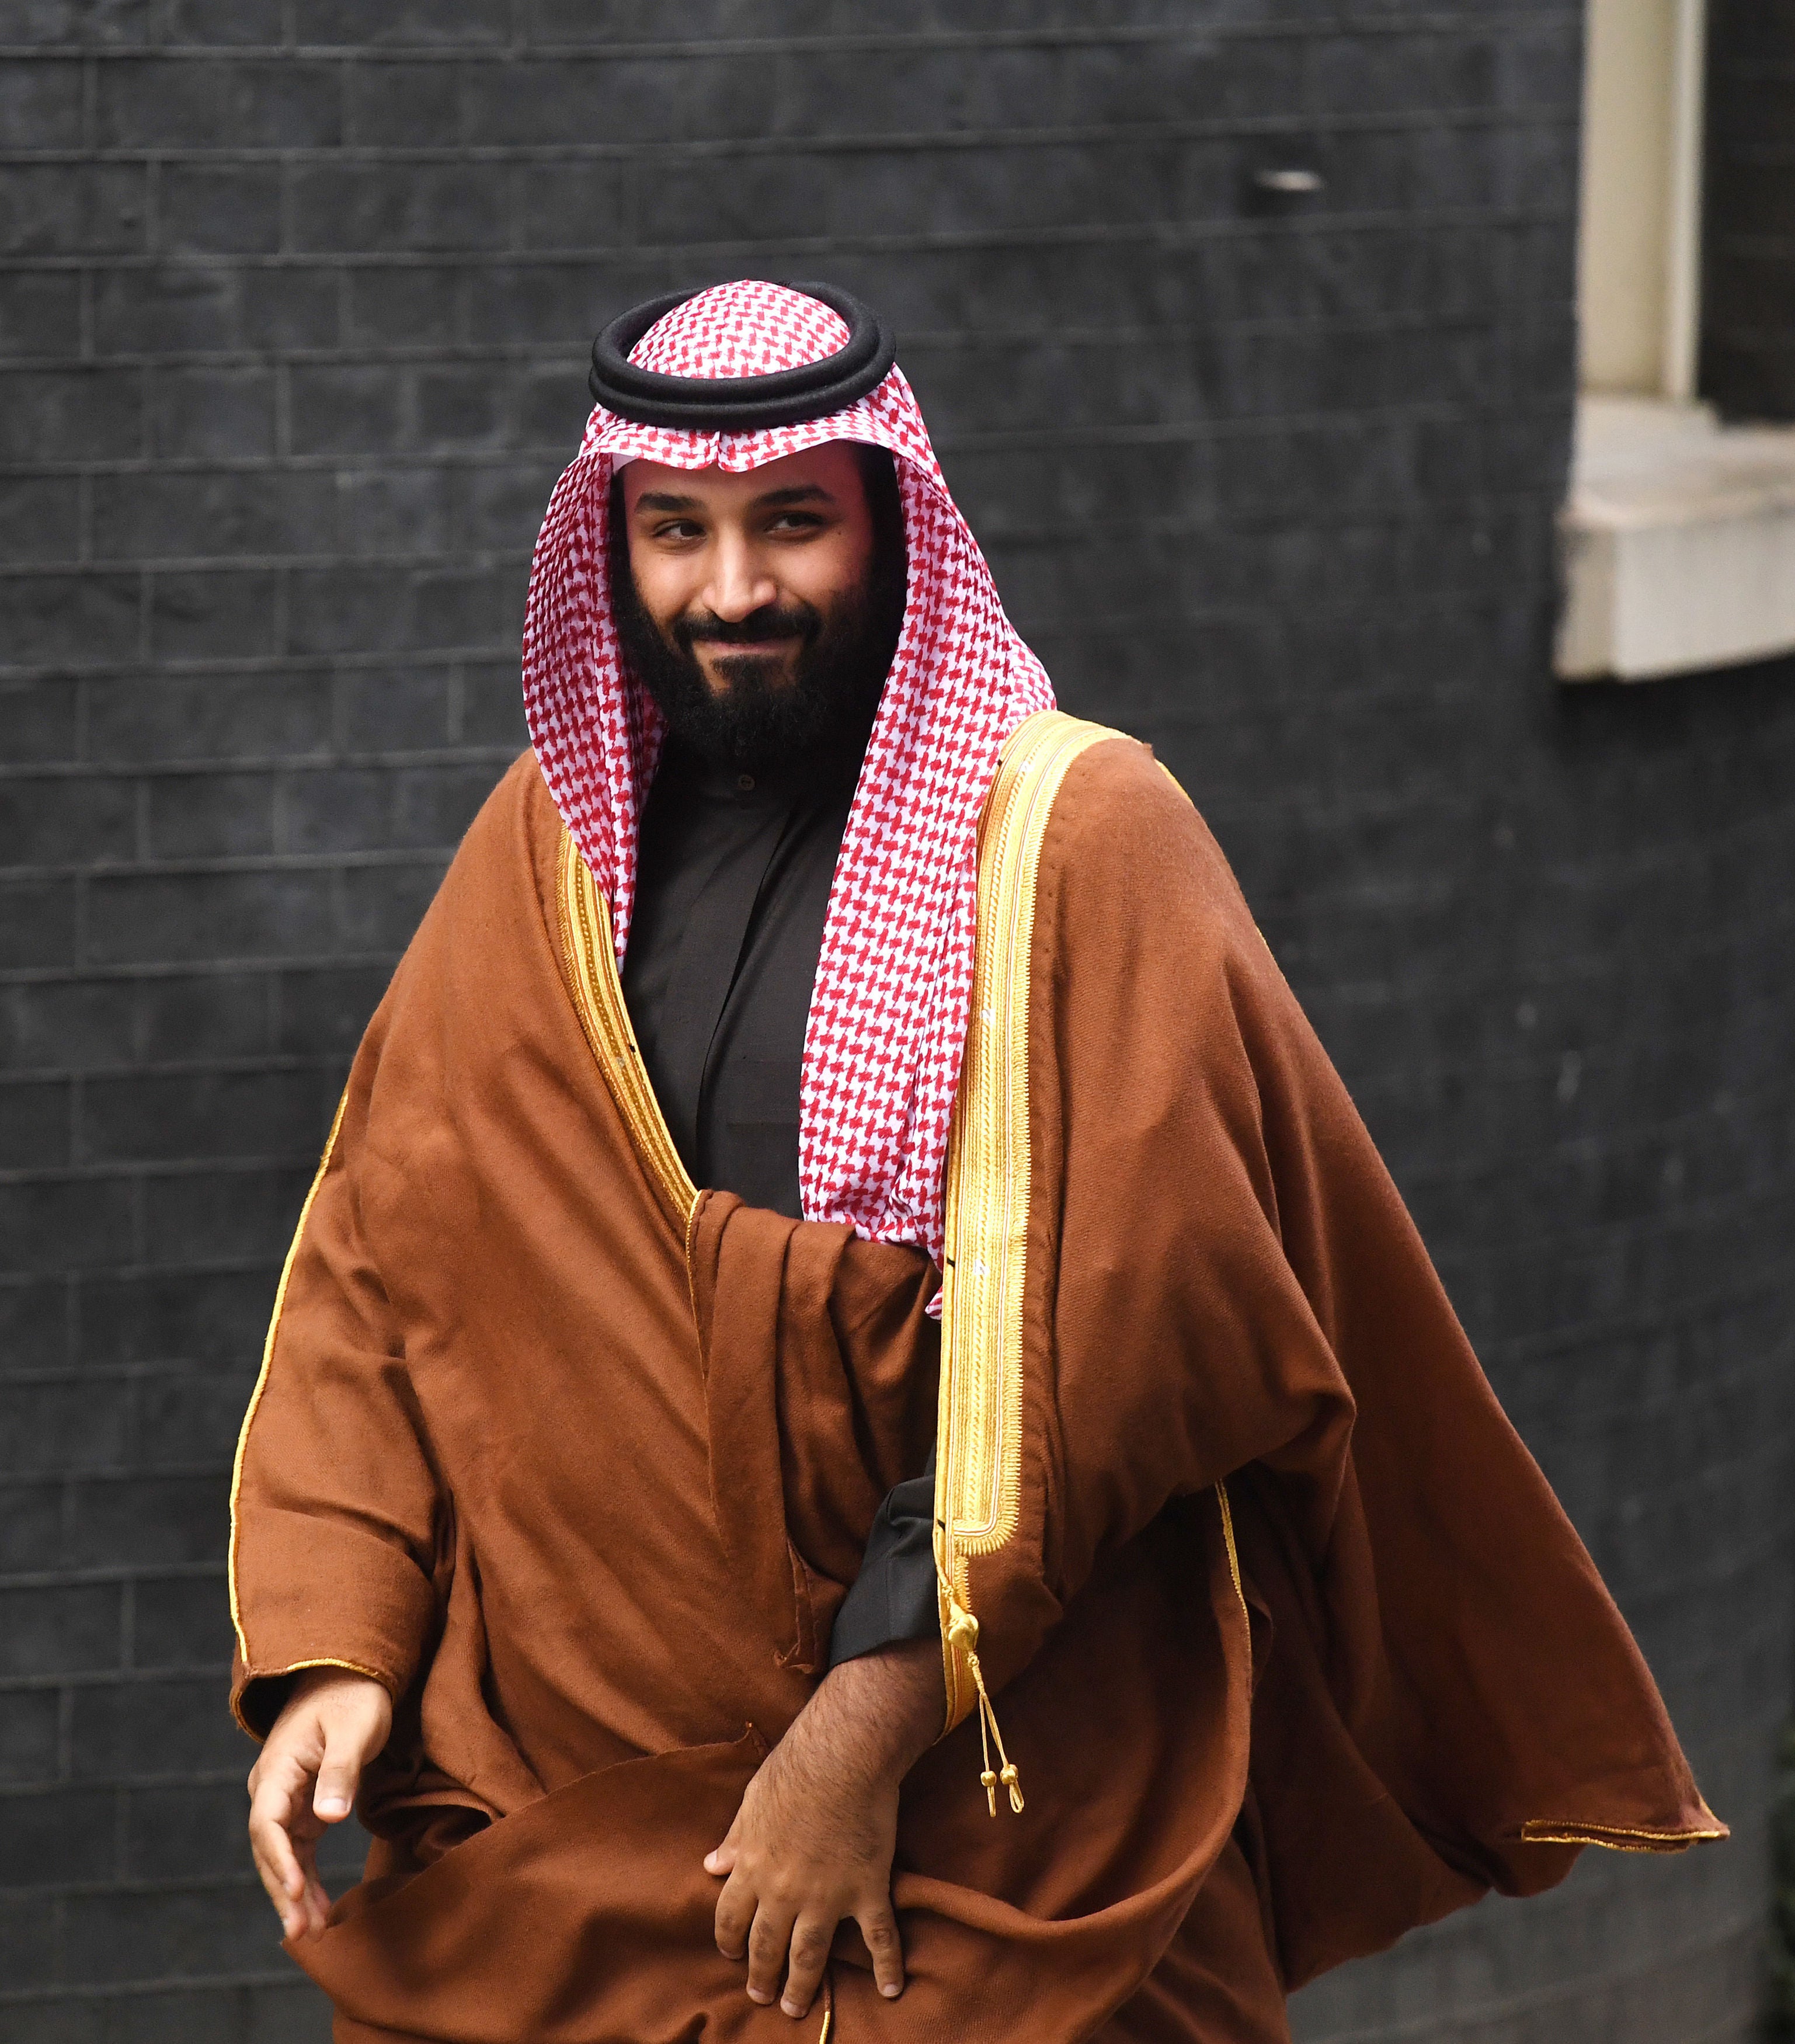 Saudi Arabia’s Crown Prince Mohammed bin Salman (Victoria Jones/PA)